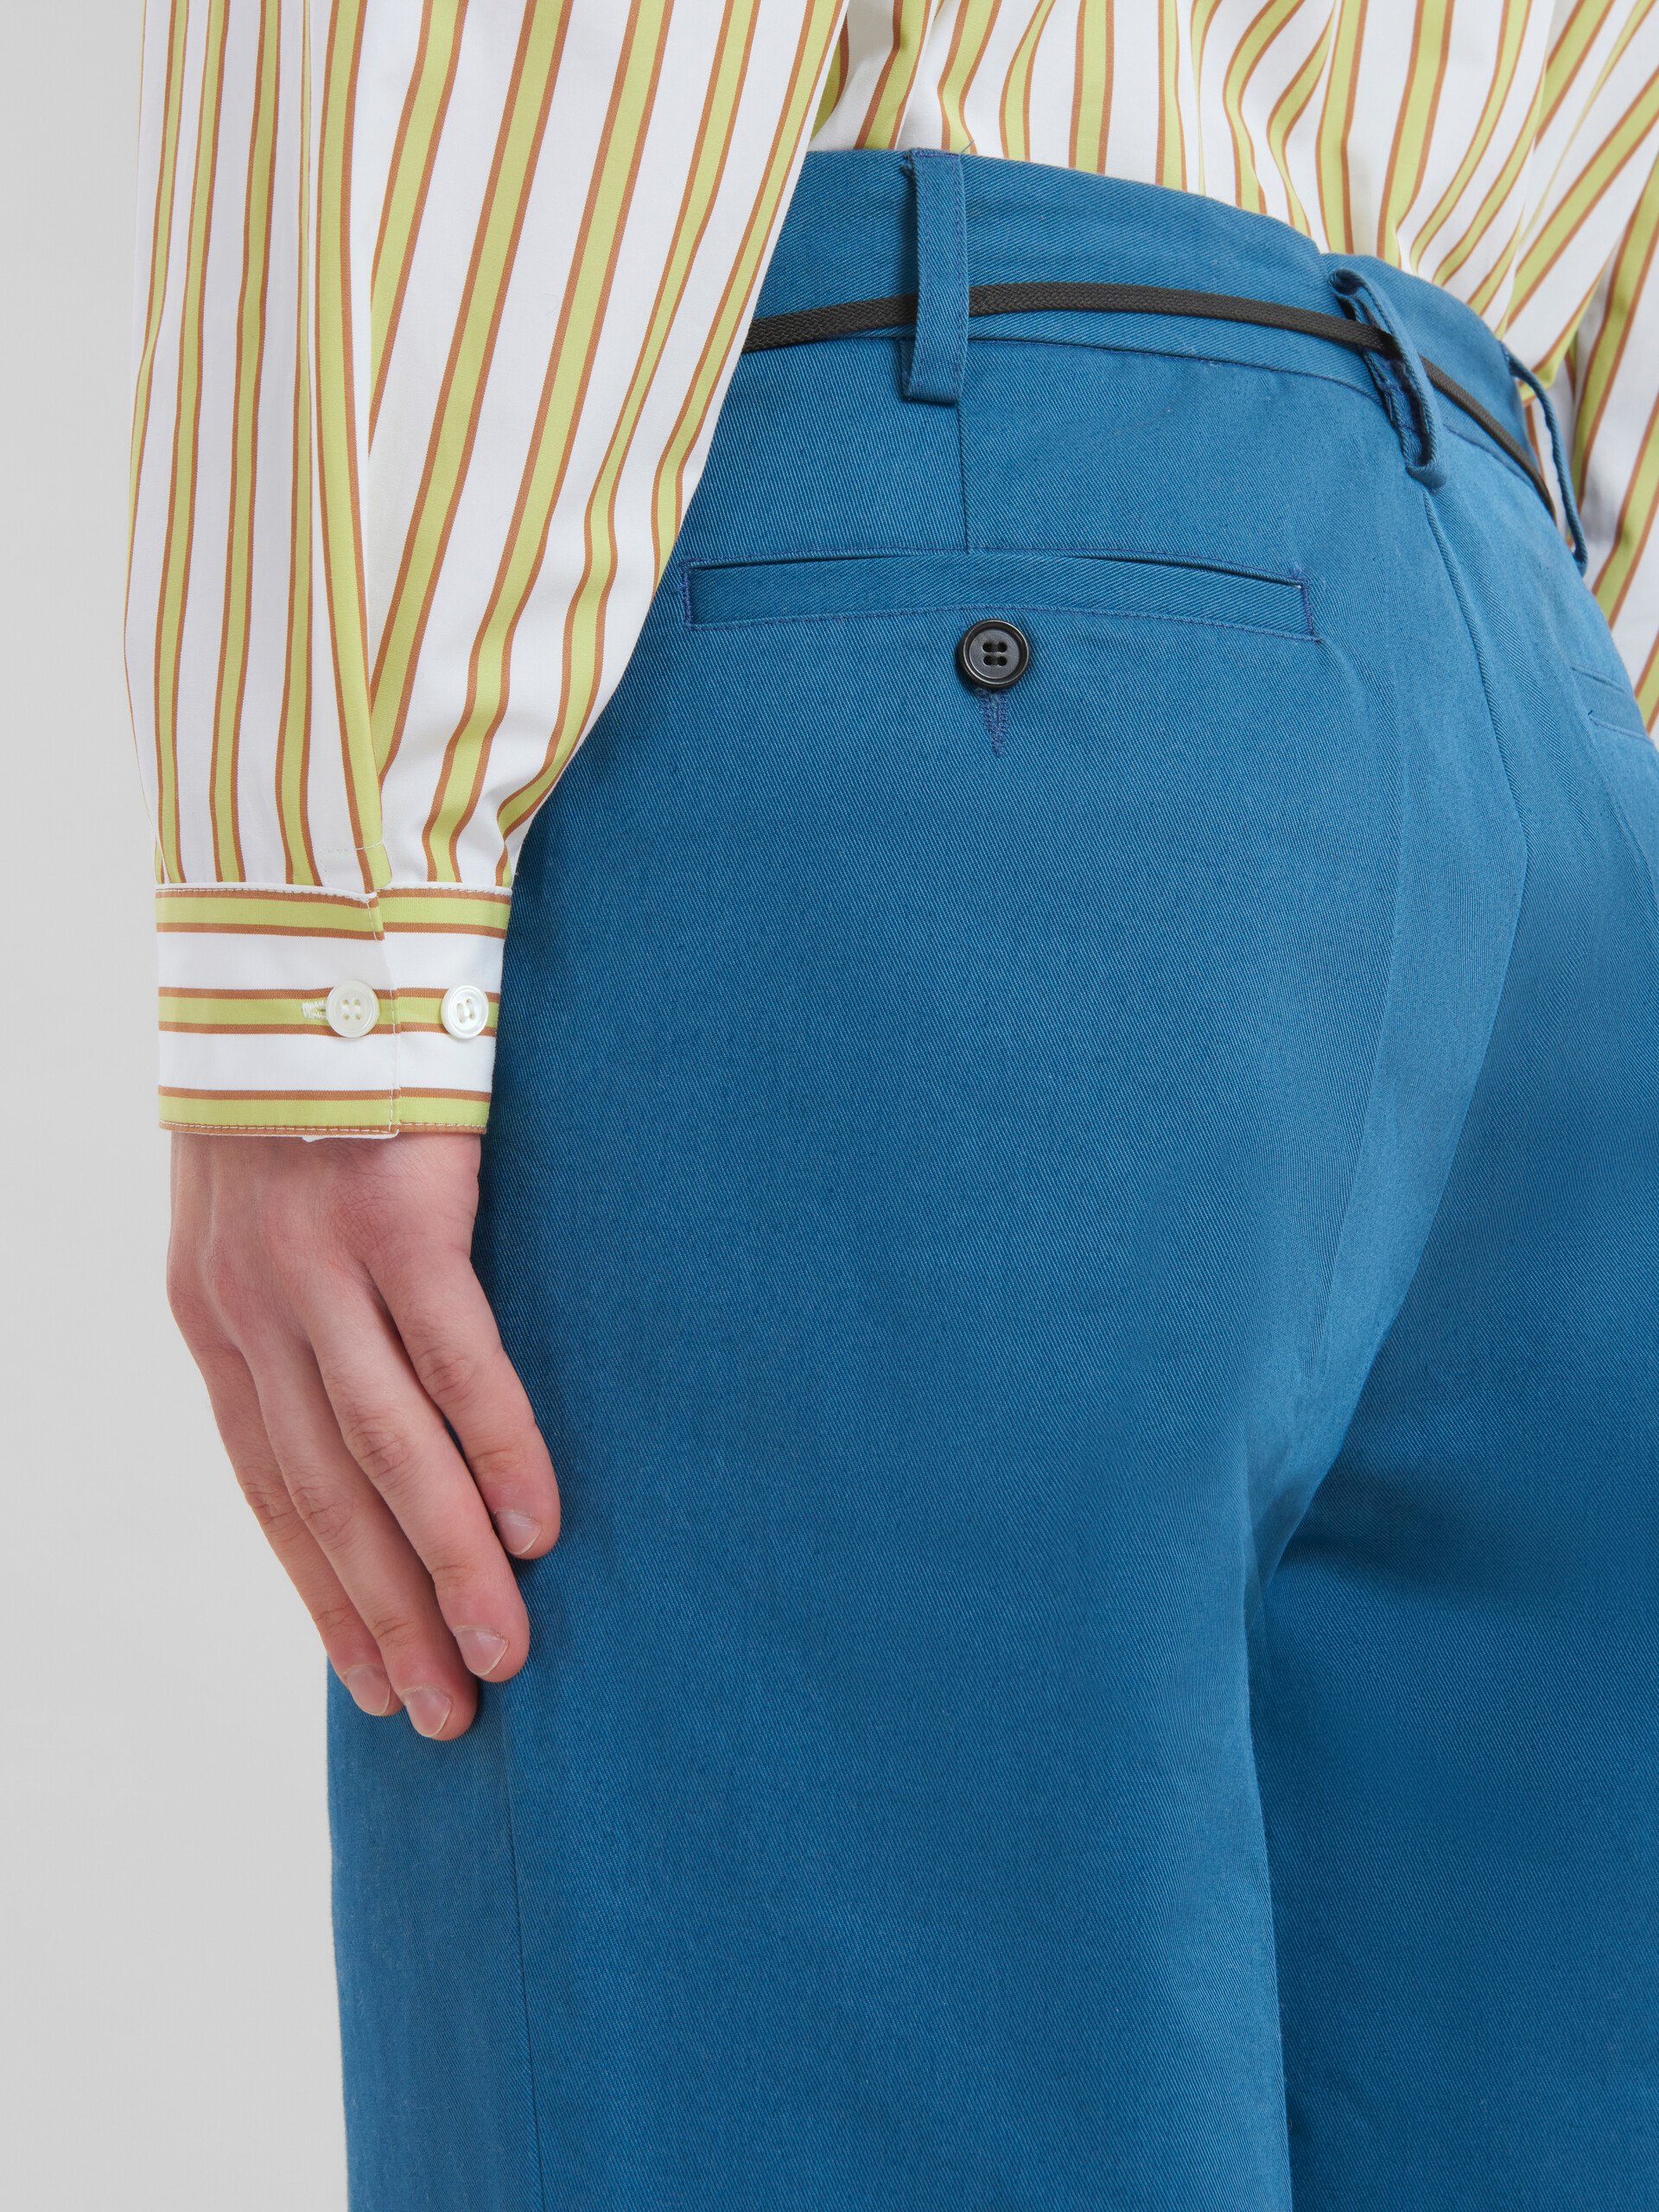 Pantaloni chino in cotone biologico blu - Pantaloni - Image 4